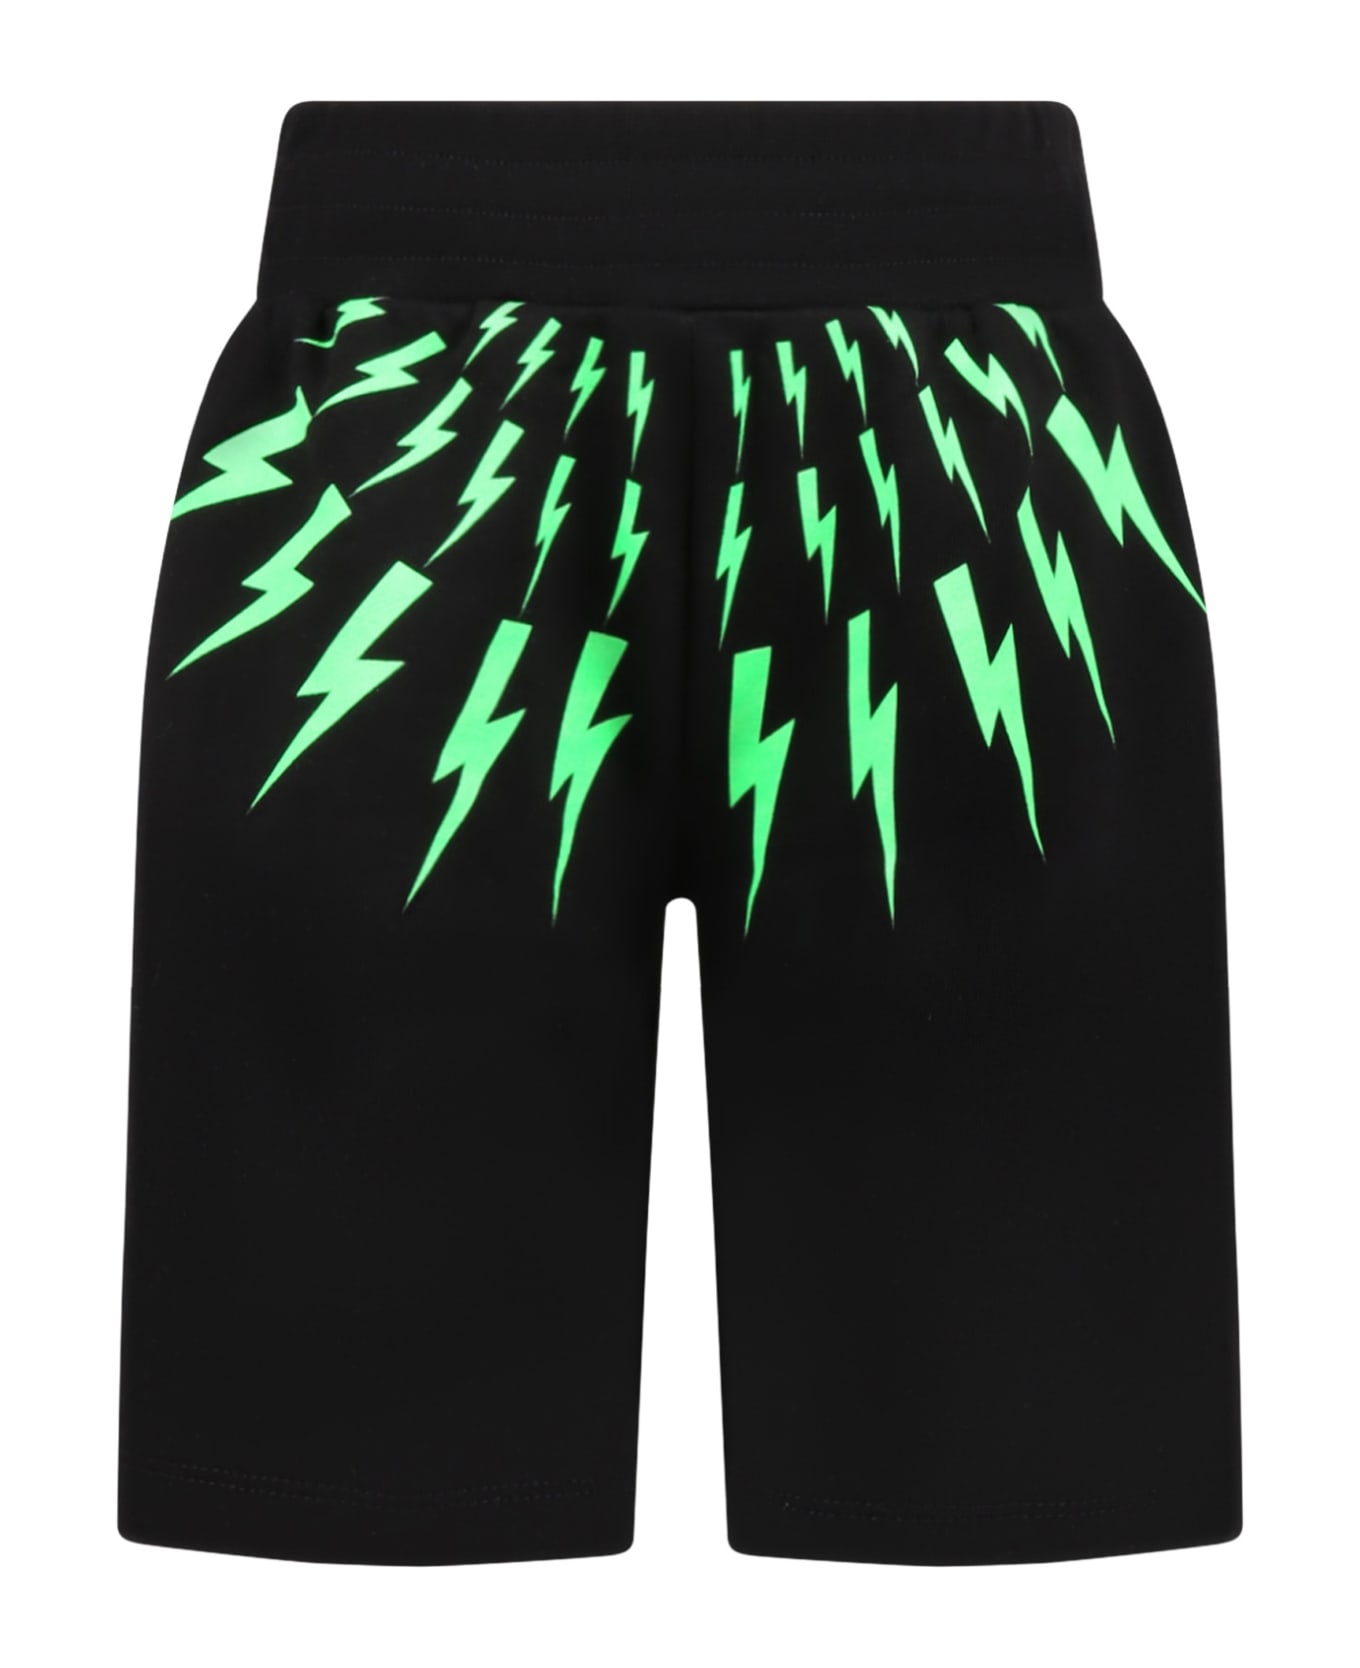 Neil Barrett Black Shorts For Boy With Iconic Lightning Bolts - Black ボトムス